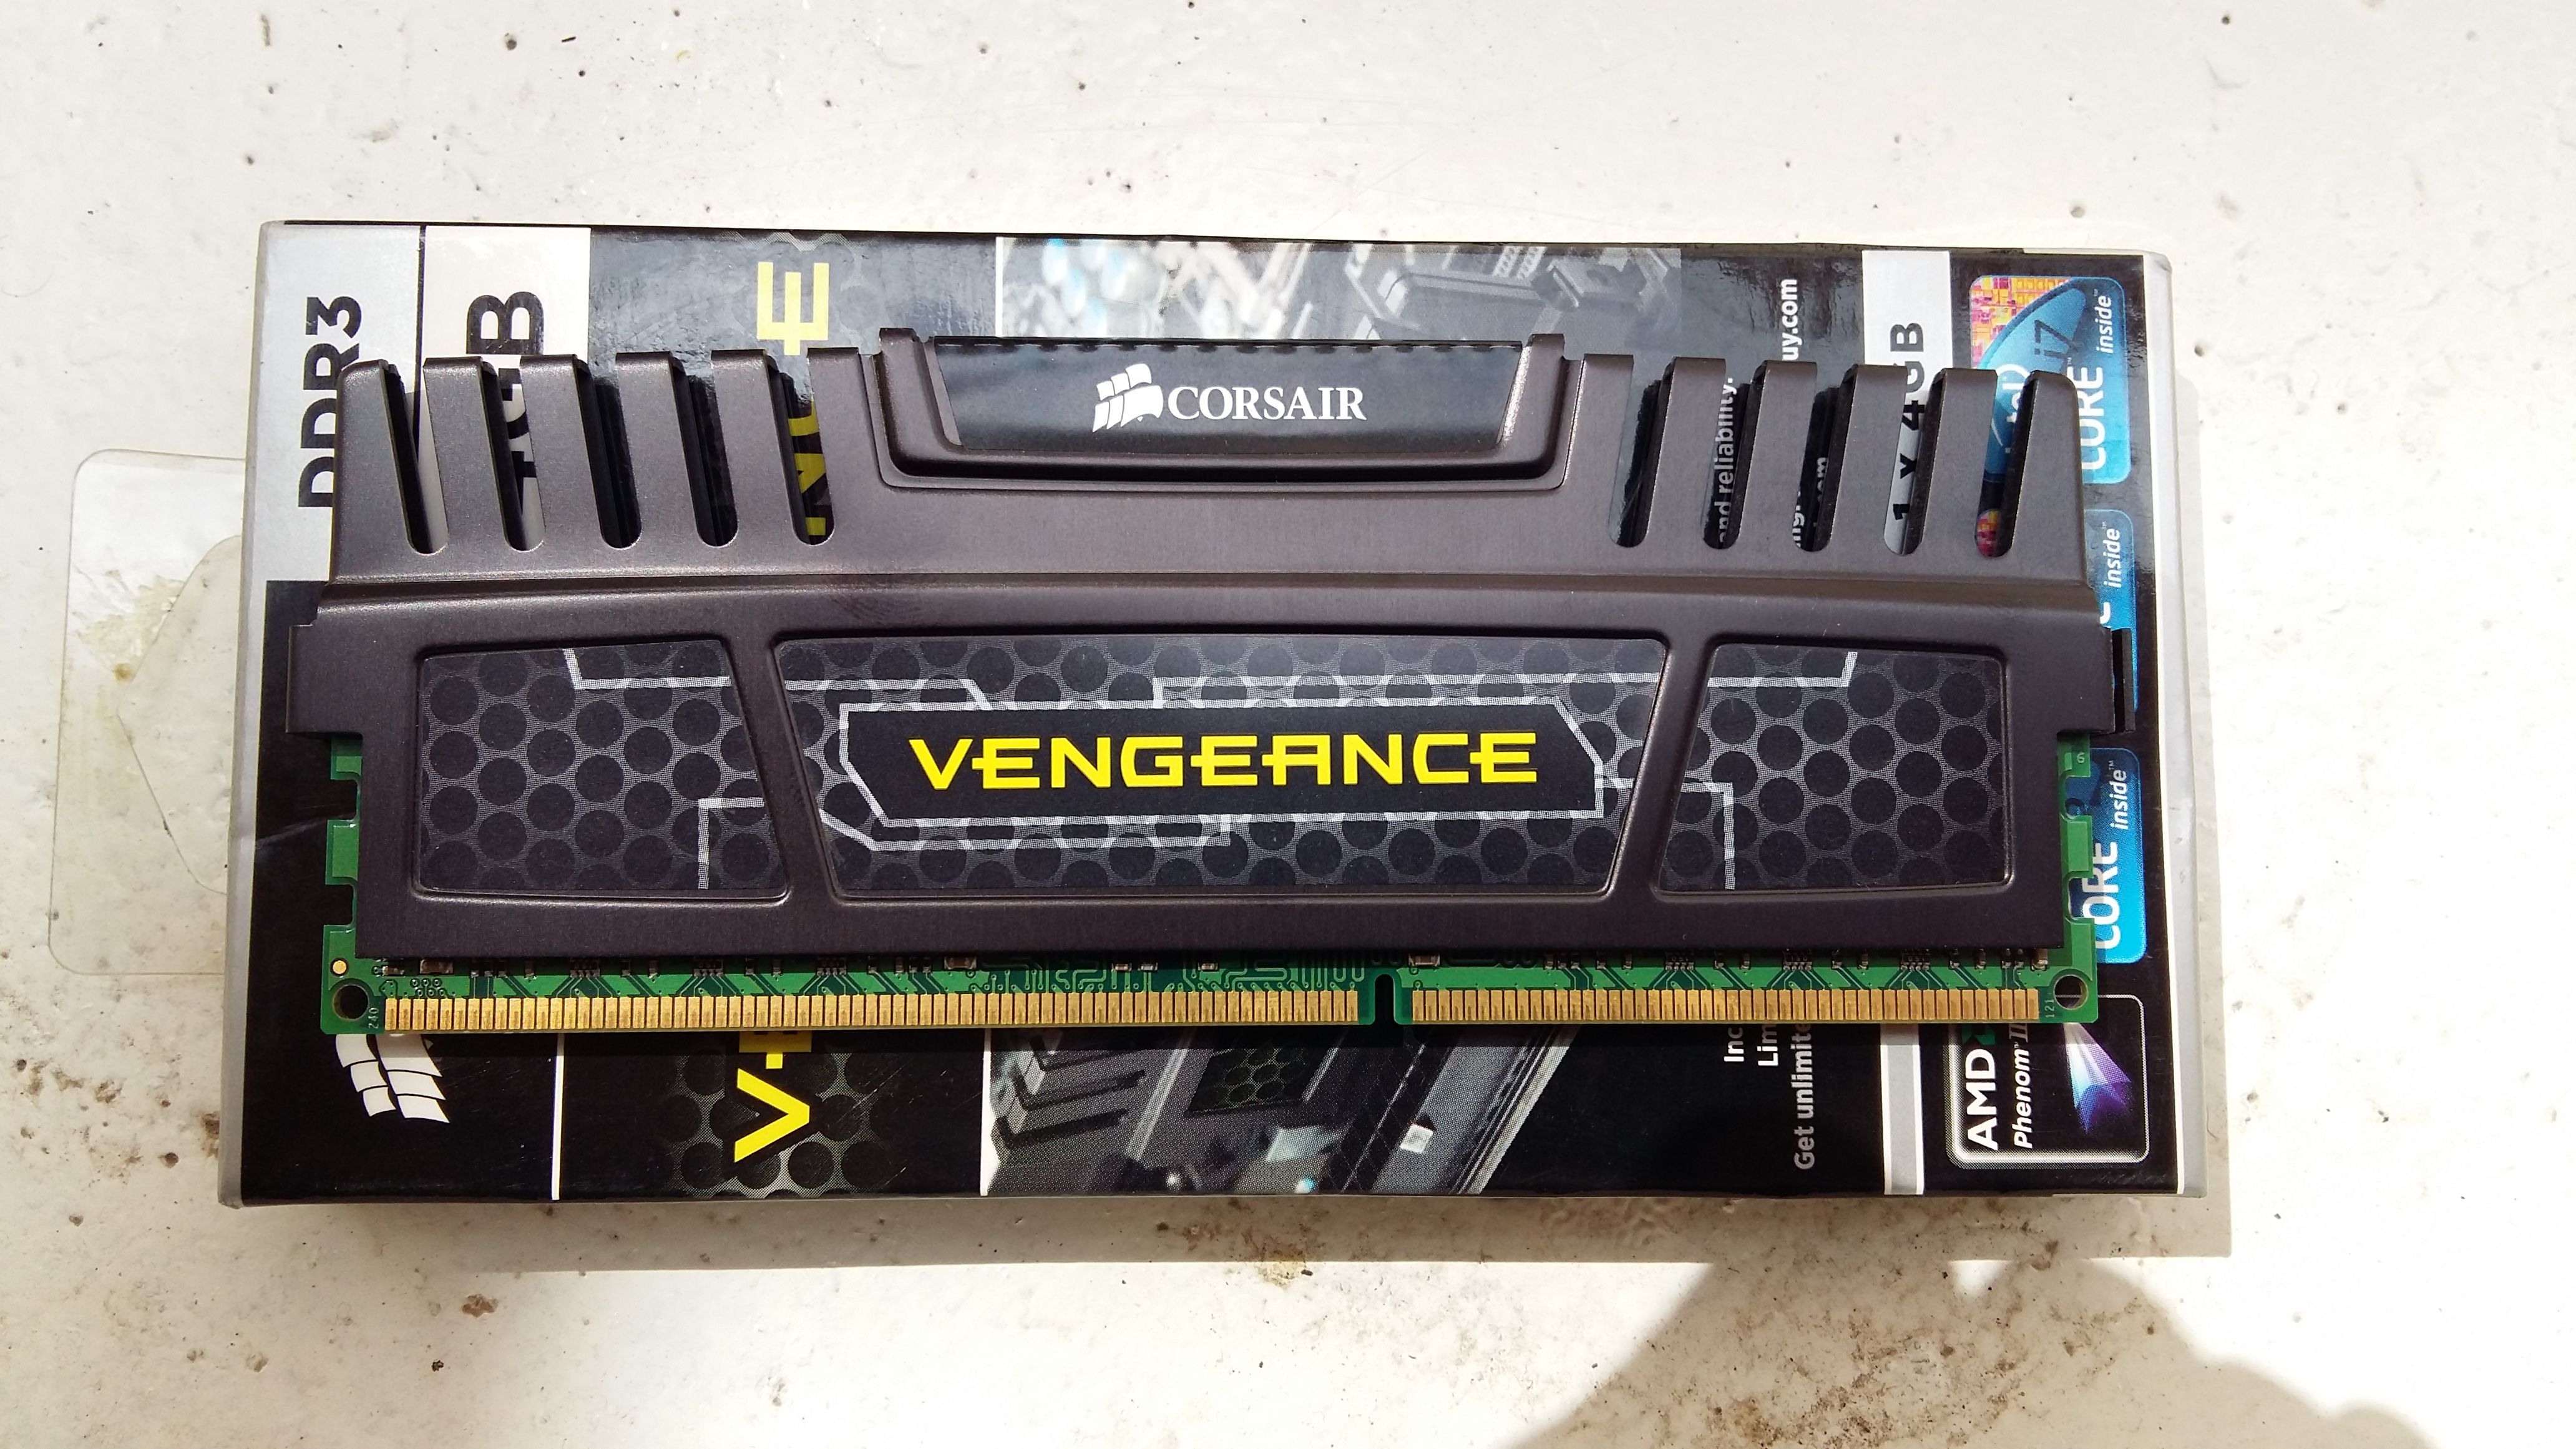 Corsair Vengeance 4GB DDR3 1600MHz CL9 RAM ne kadar eder? | Technopat Sosyal